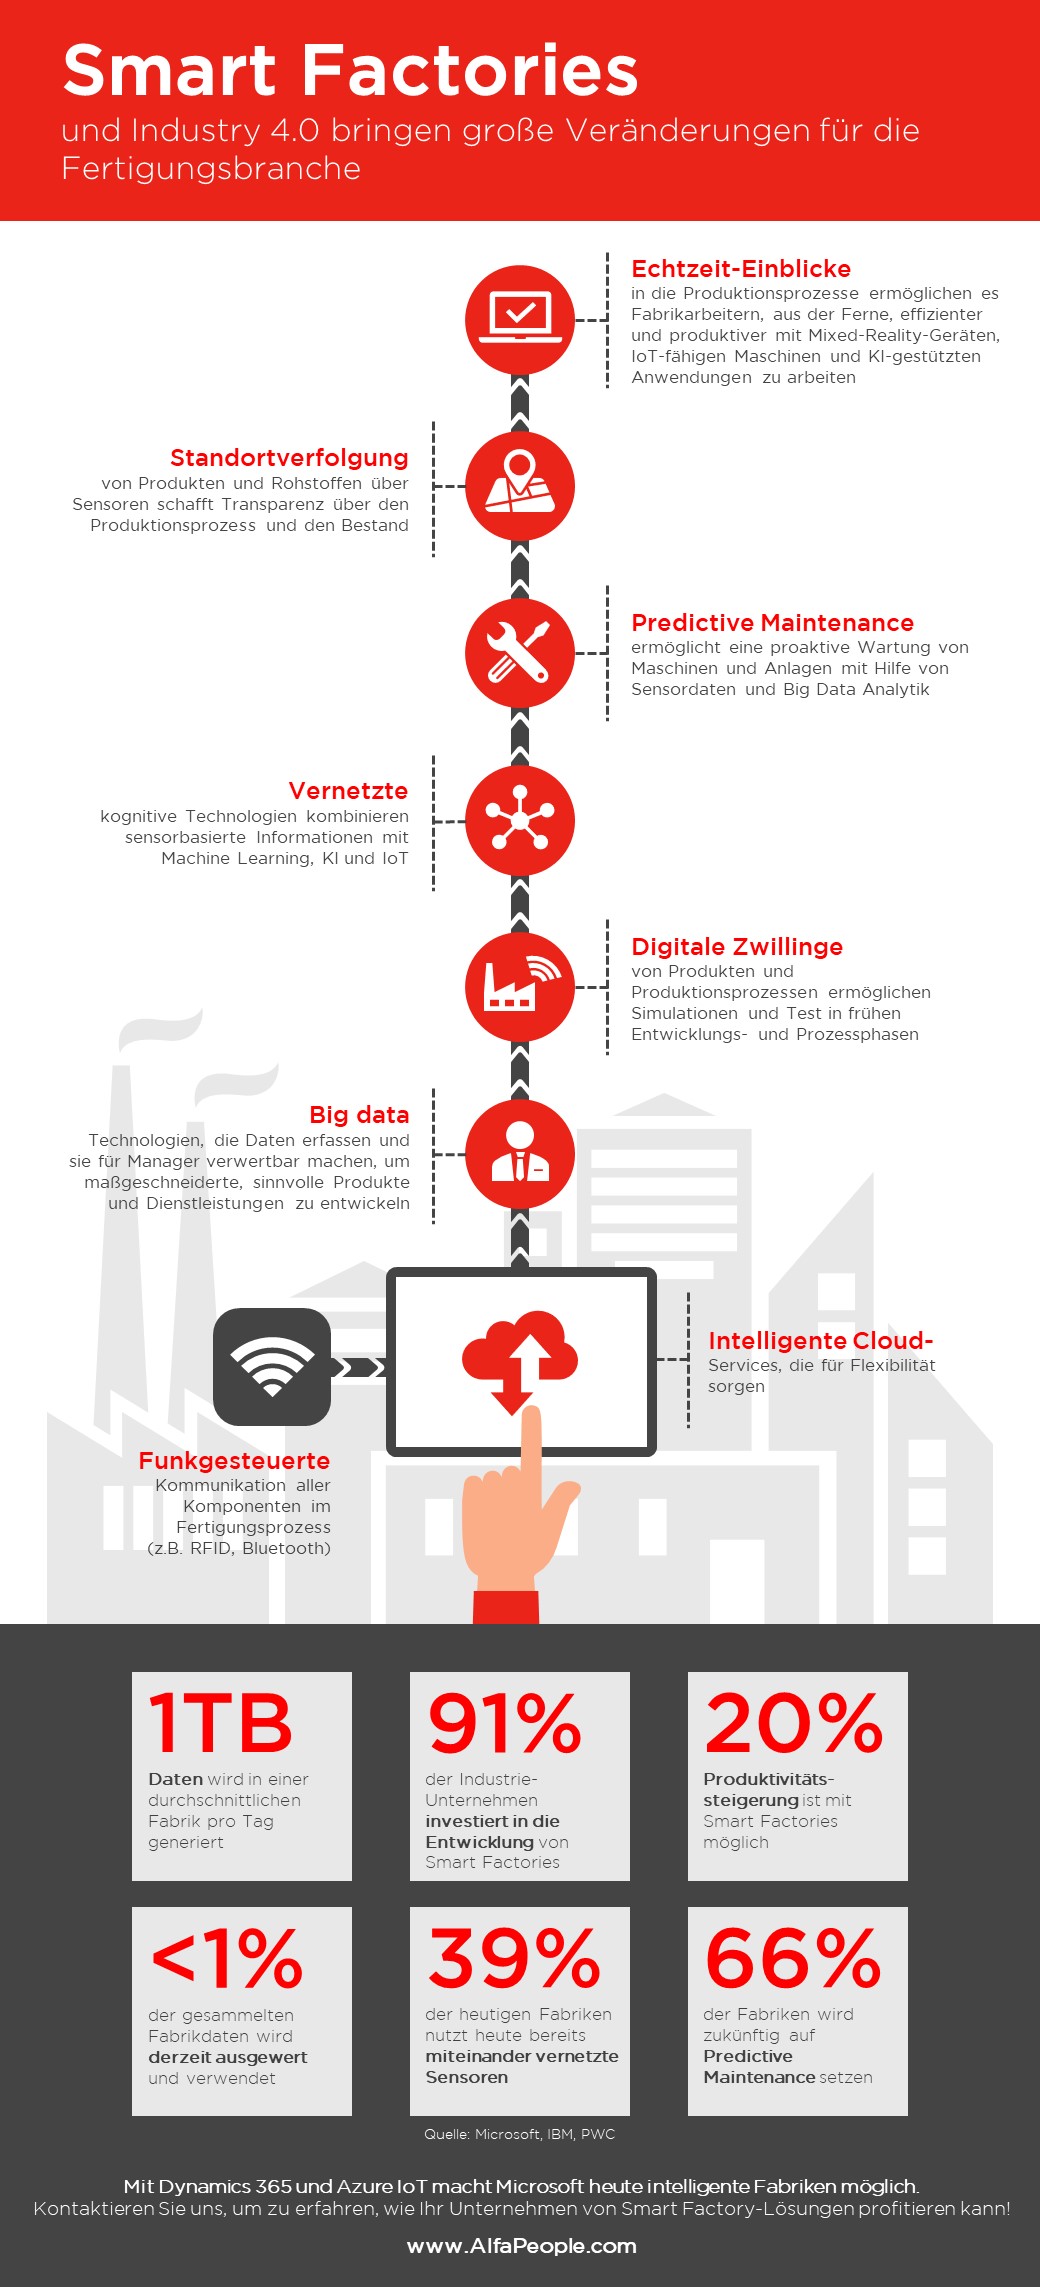 Infographic: Smart Factories und Industry 4.0